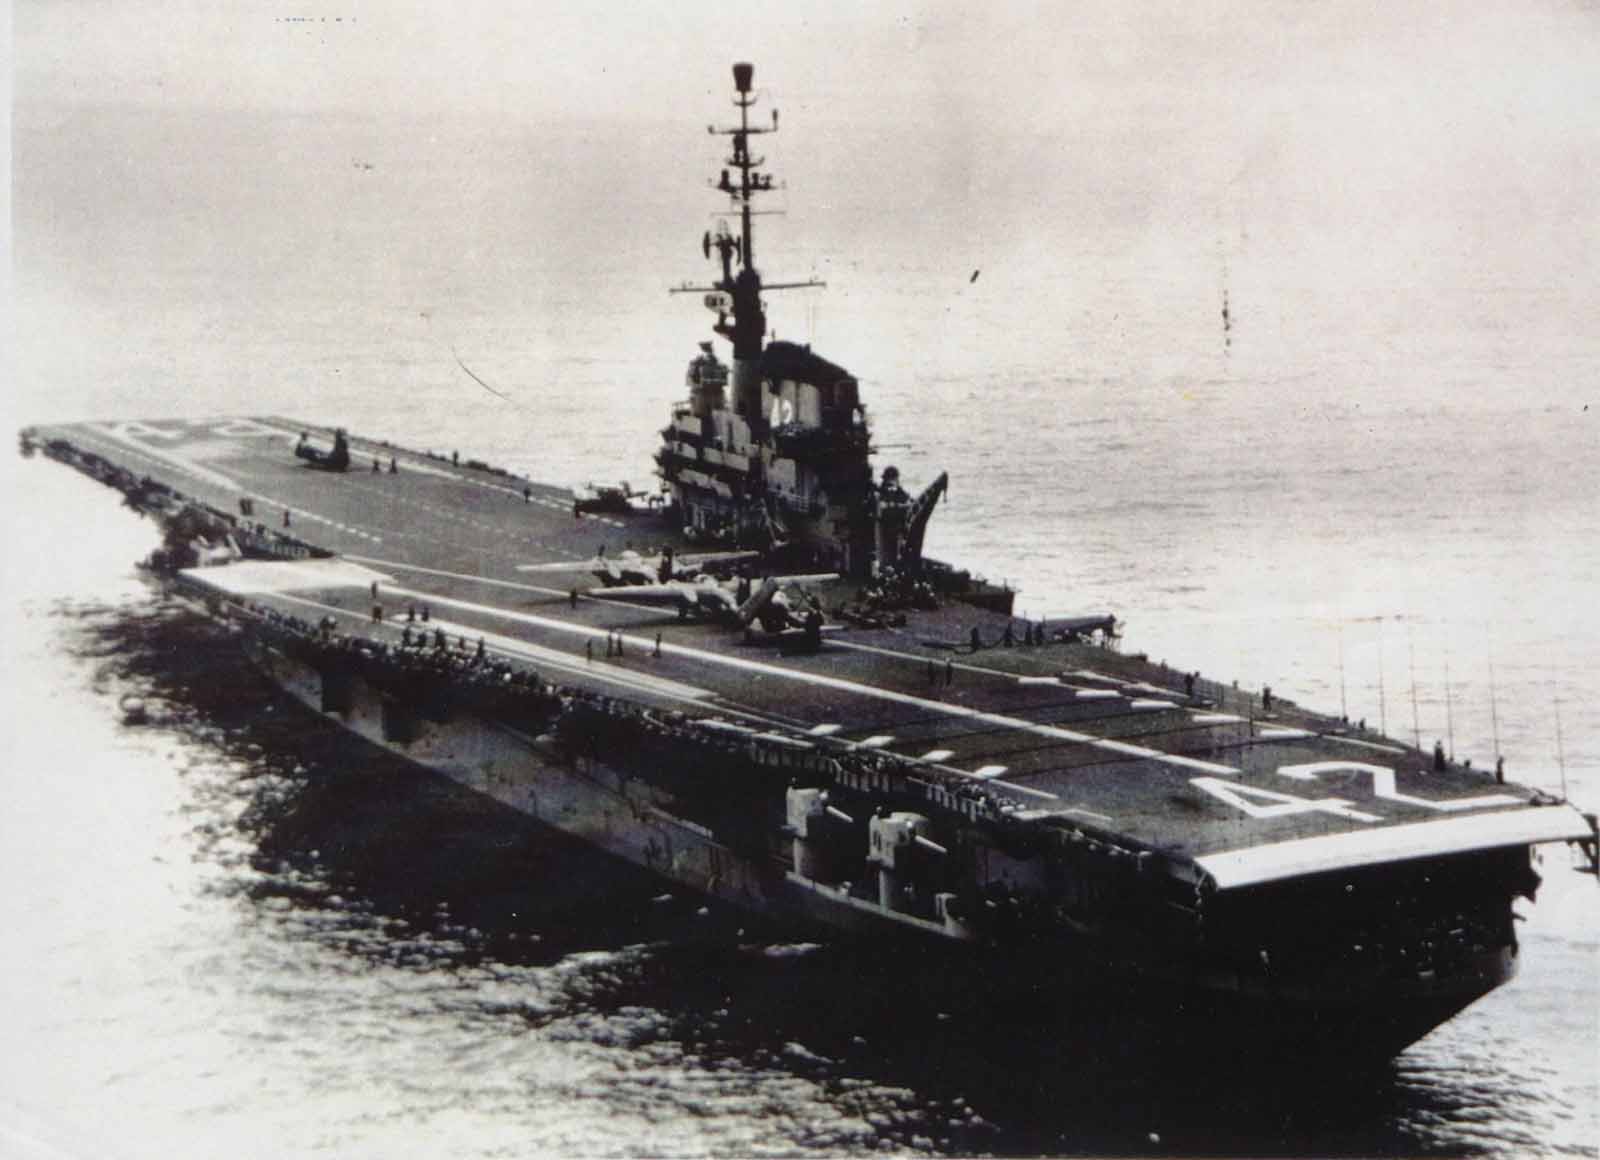 USS Franklin D. Roosevelt - Operation Mainbrace, September 19, 1952